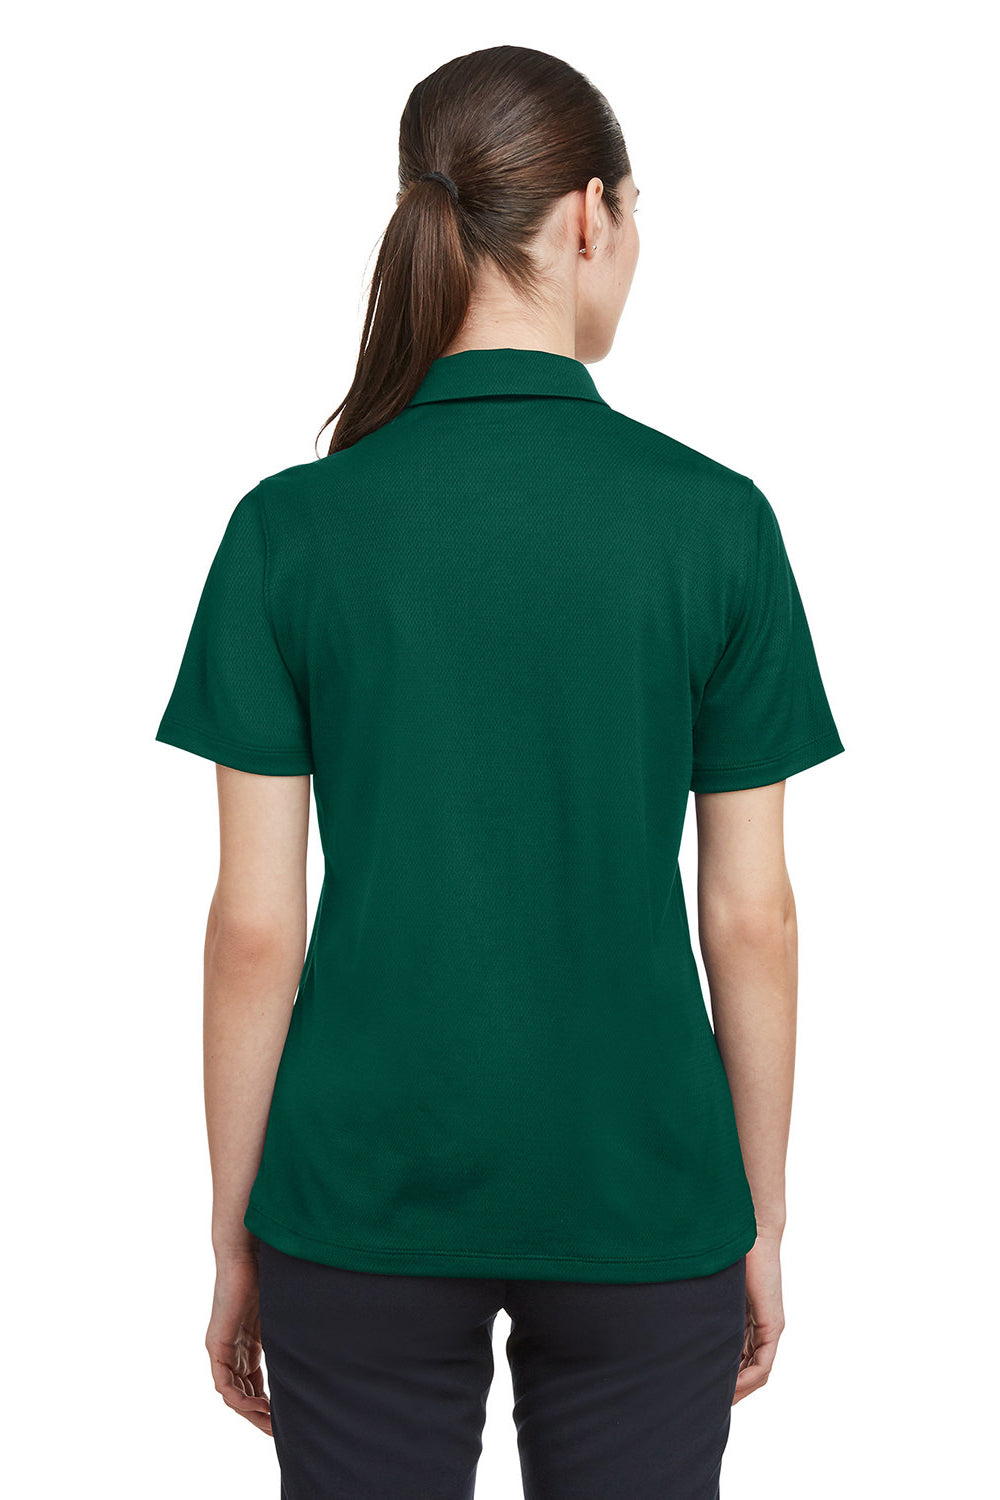 Under Armour 1370431 Womens Tech Moisture Wicking Short Sleeve Polo Shirt Forest Green Model Back